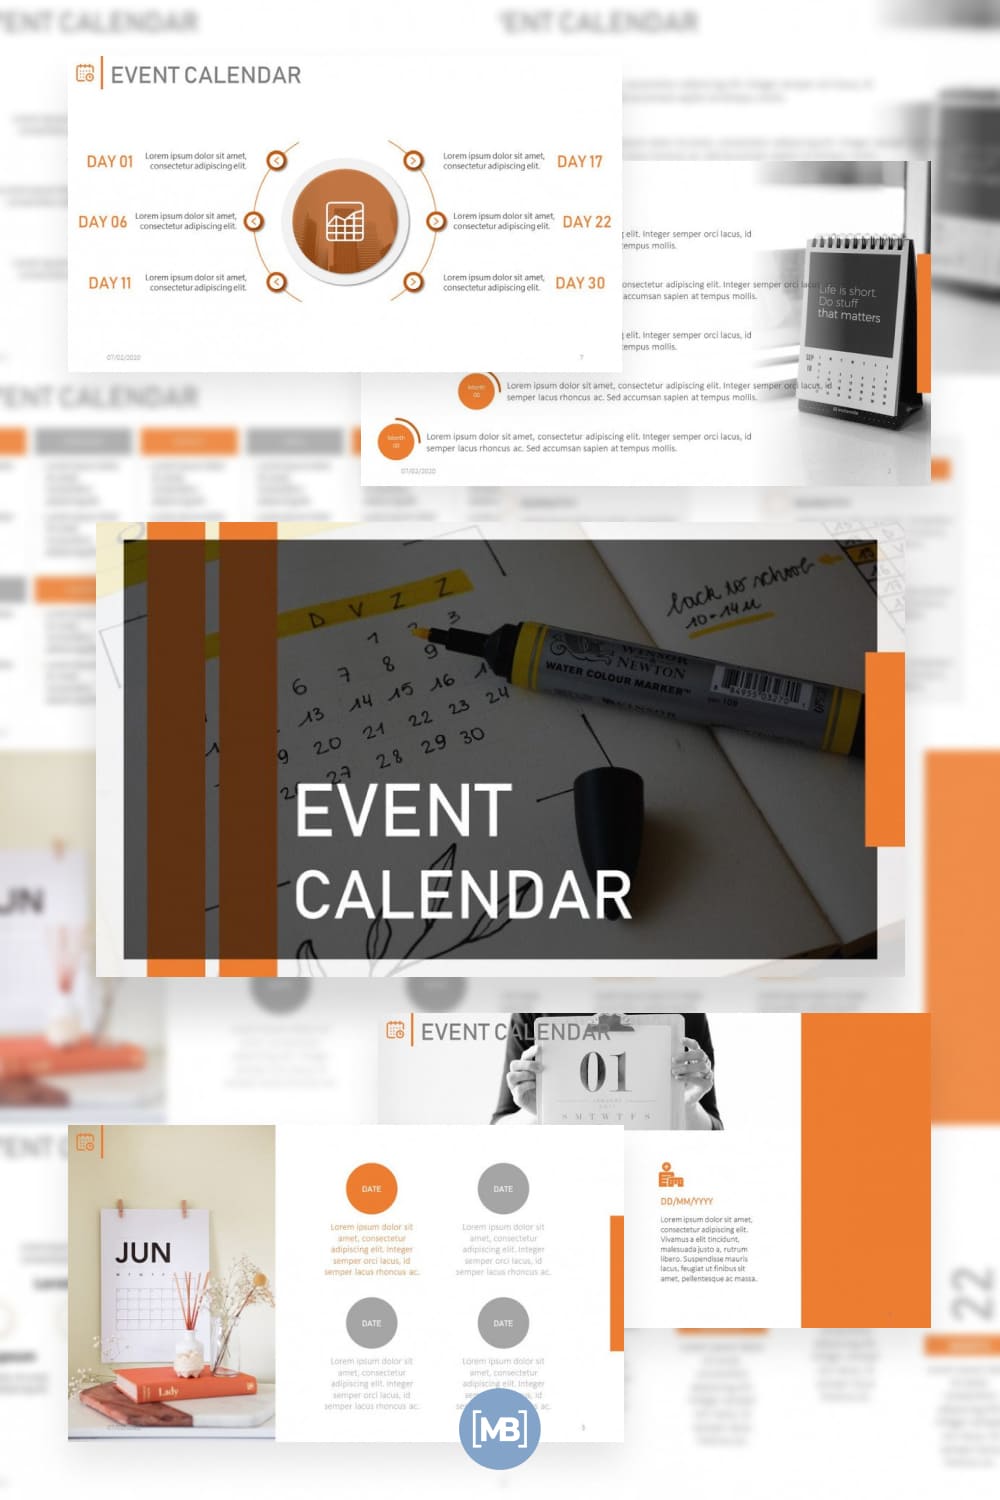 Company events calendar powerpoint template.